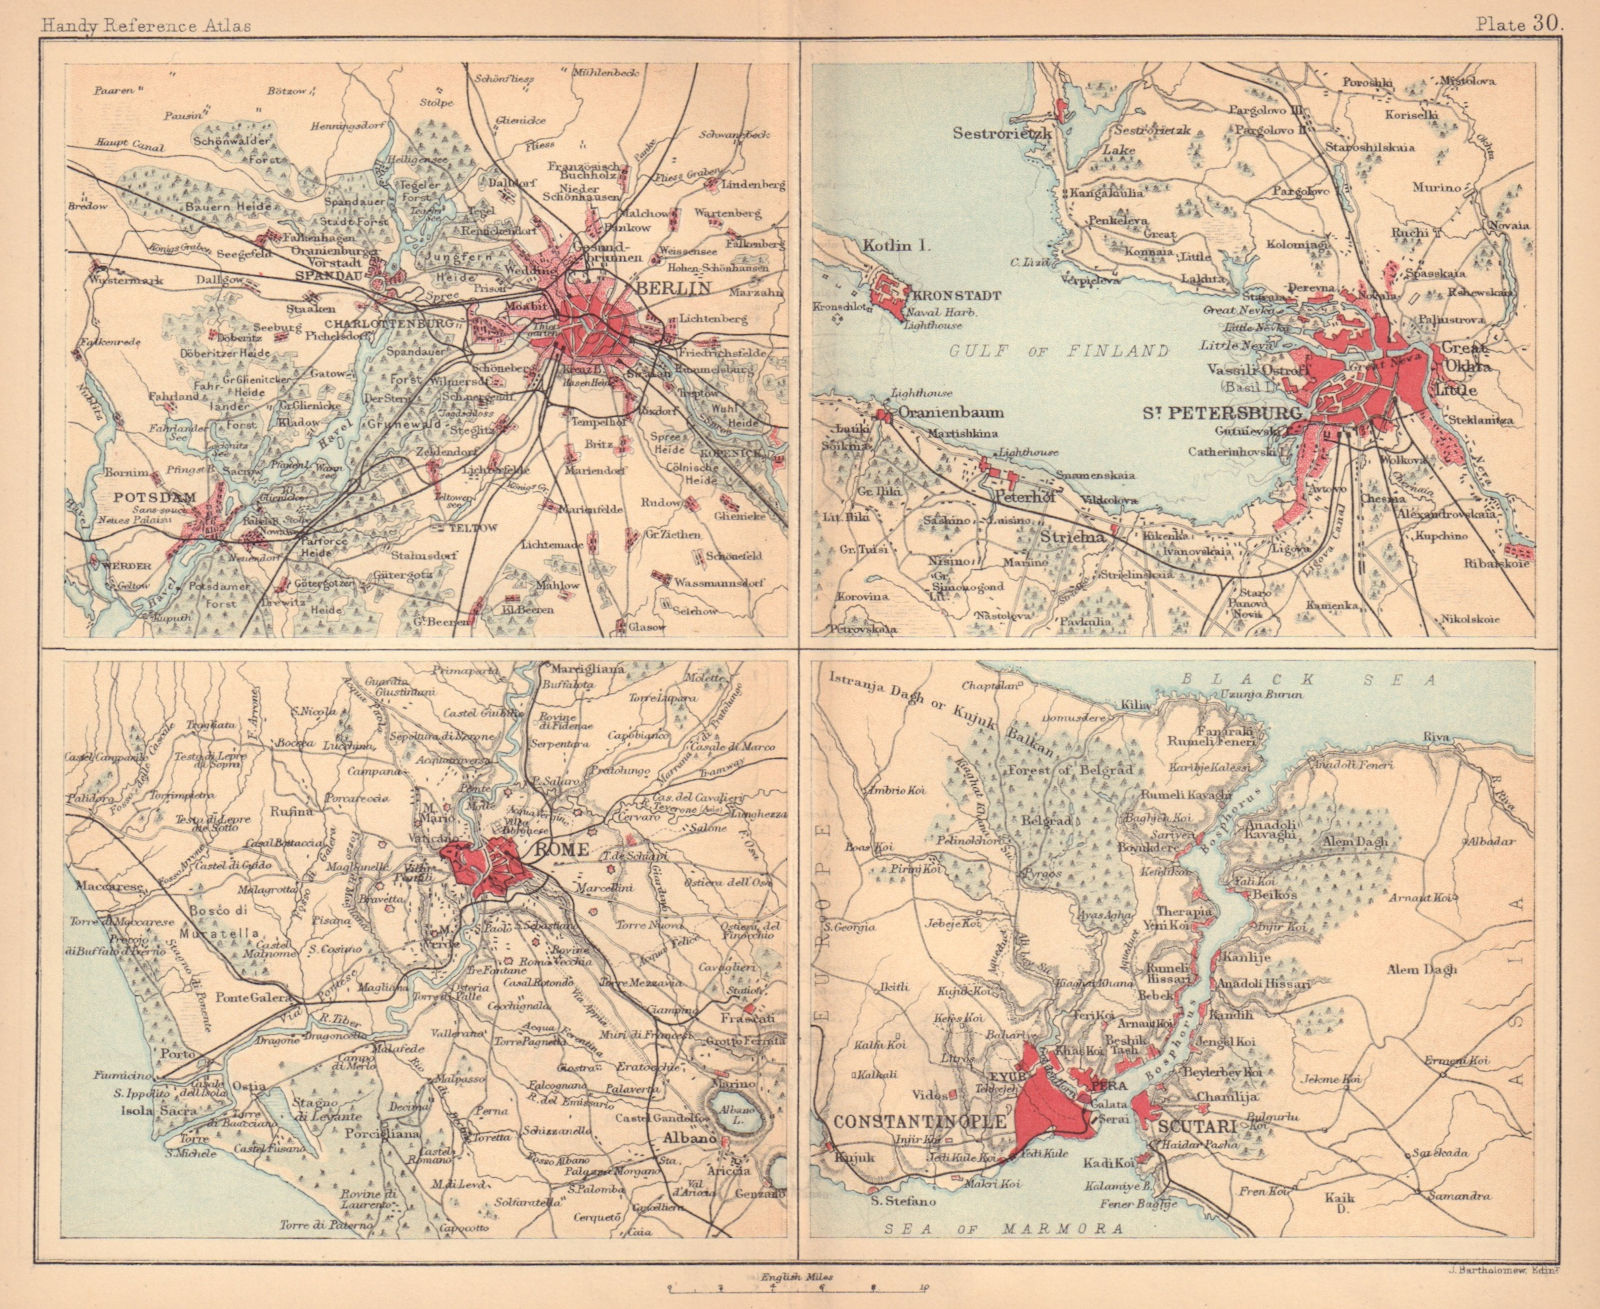 Associate Product Berlin Rome St. Petersburg Constantinople environs. BARTHOLOMEW 1888 old map